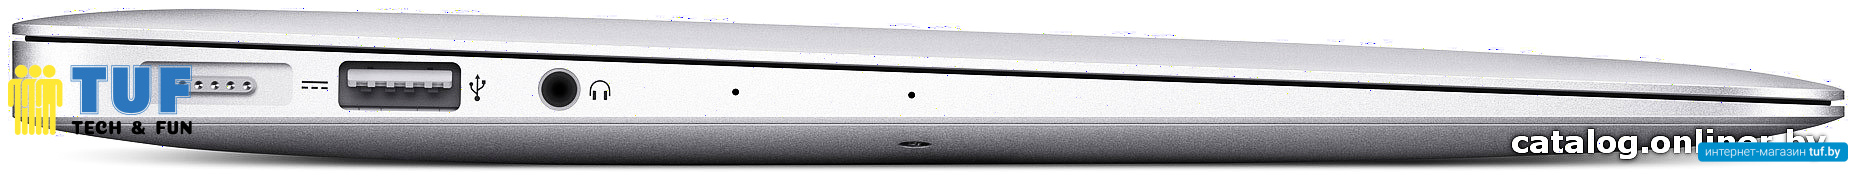 Ноутбук Apple MacBook Air 13" (MJVE2)